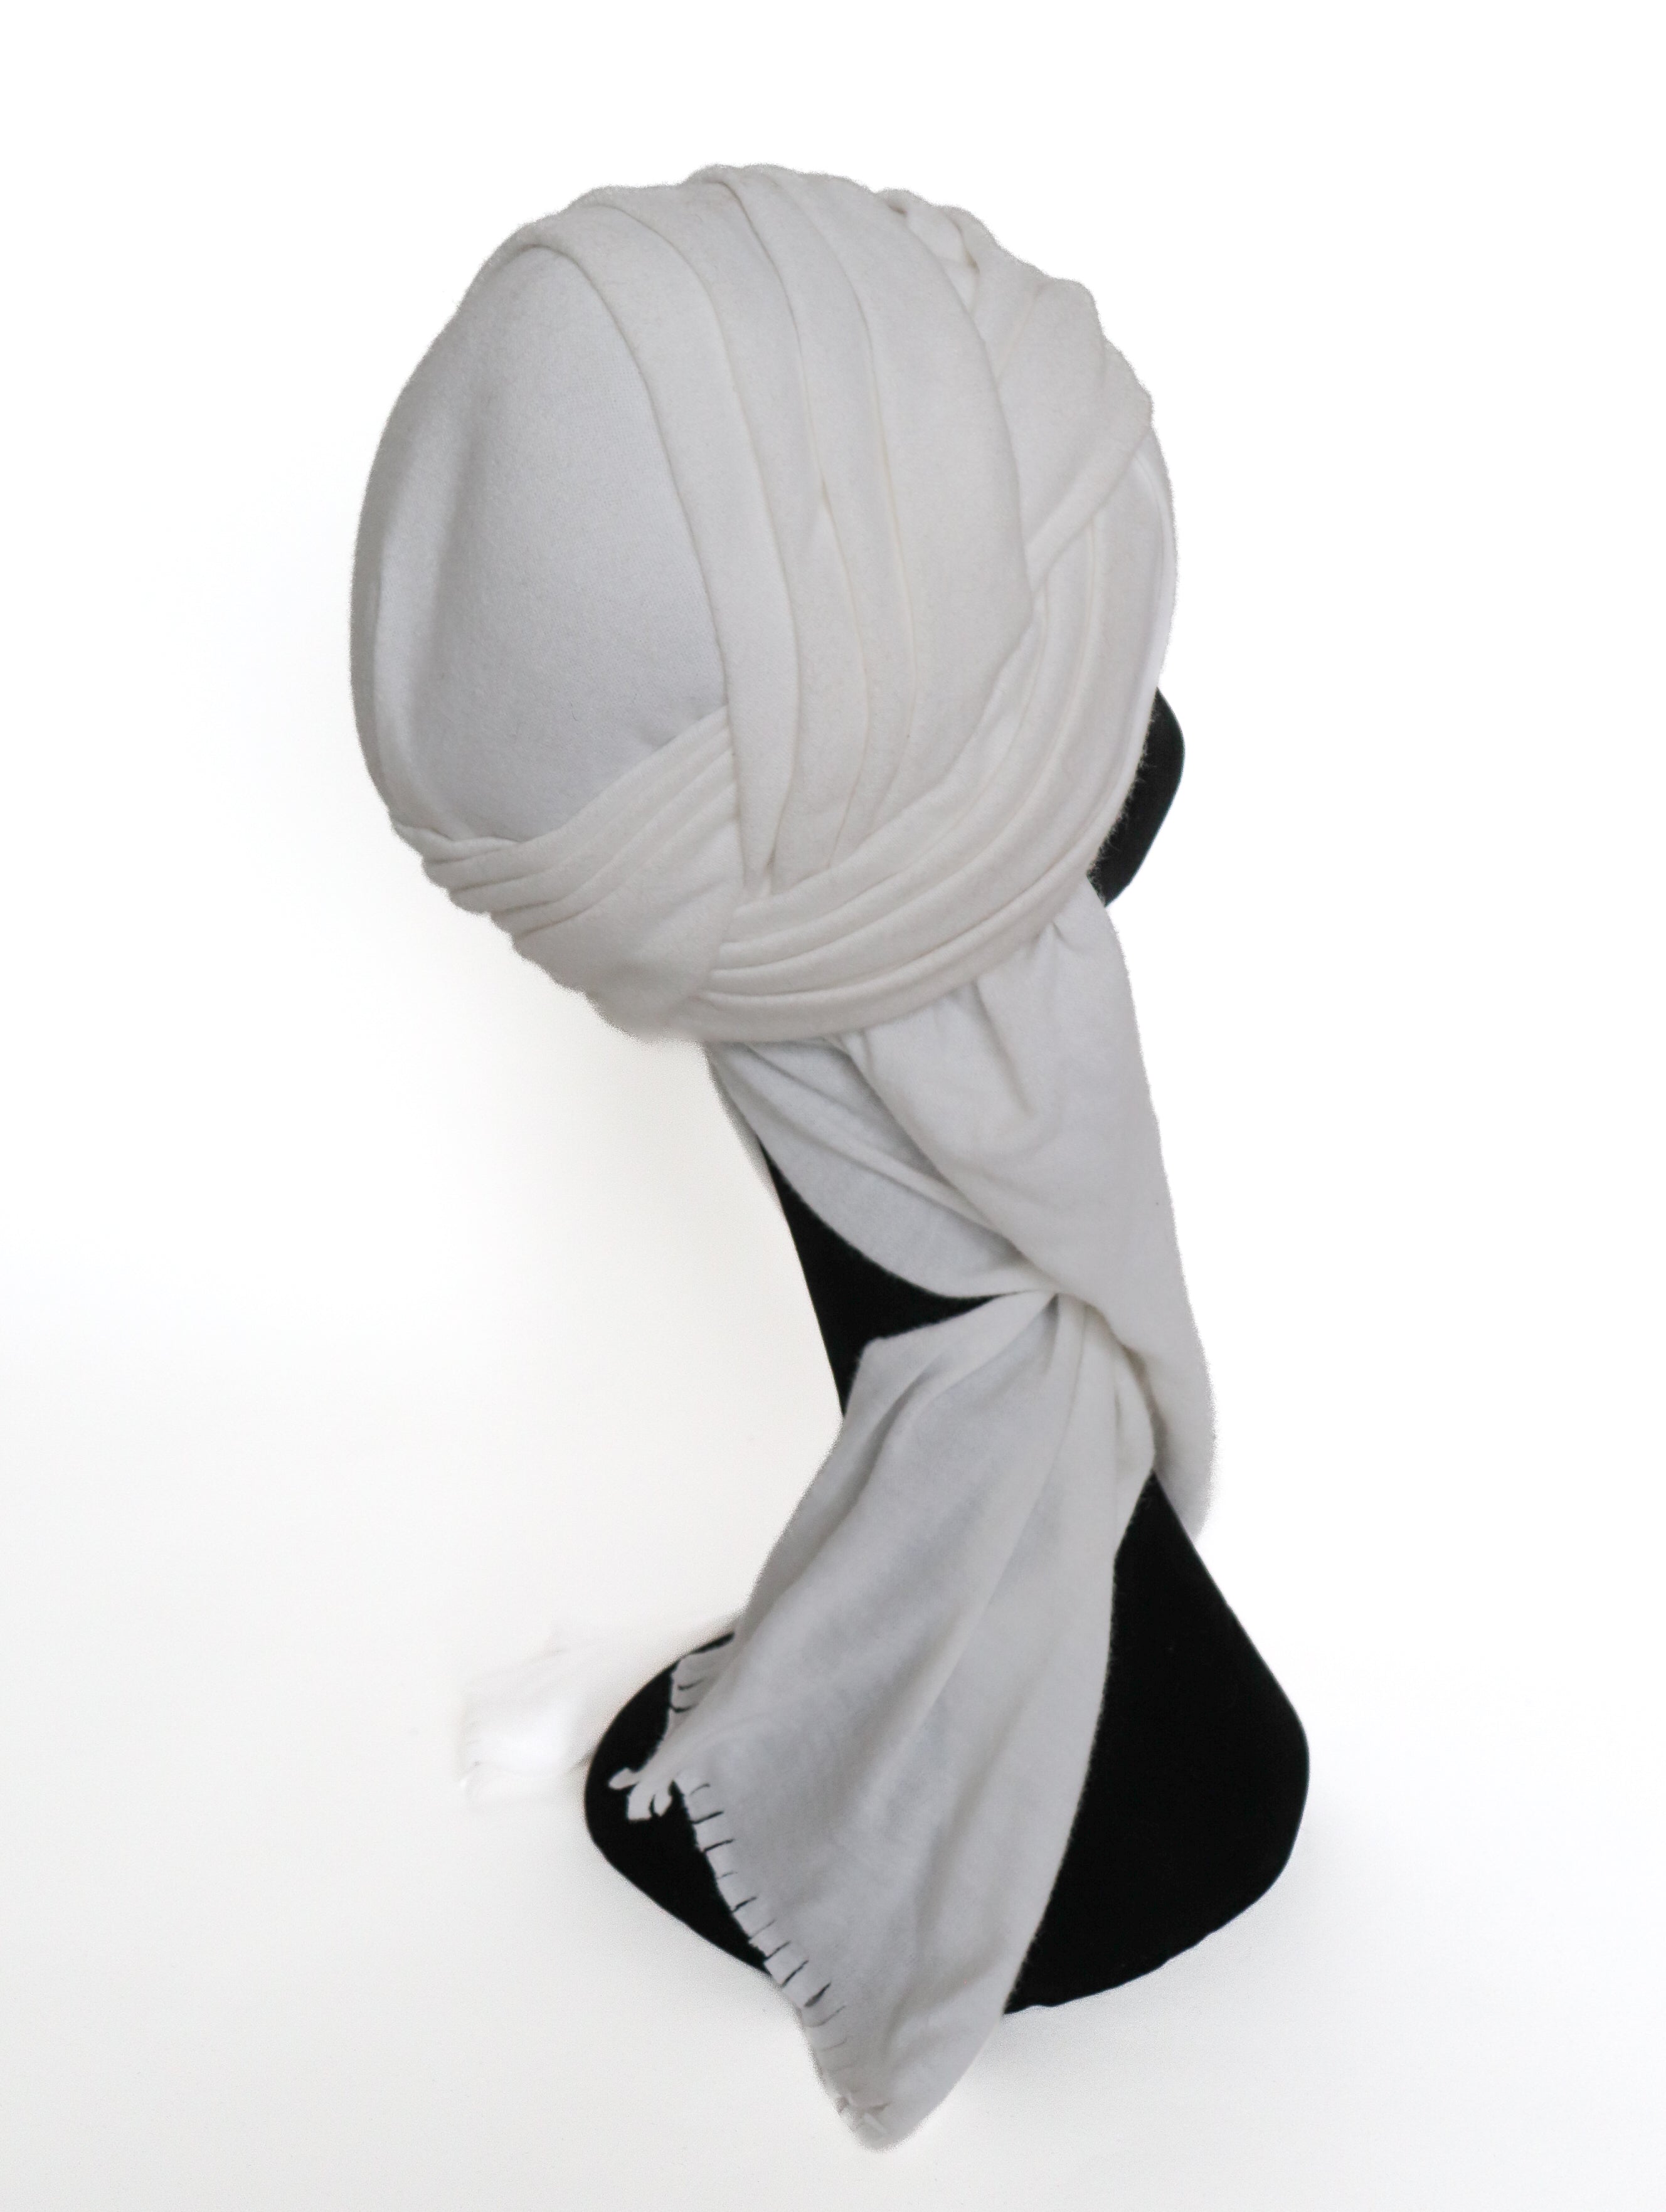 Vintage 1960s Turban Hat - White Jersey - Medium